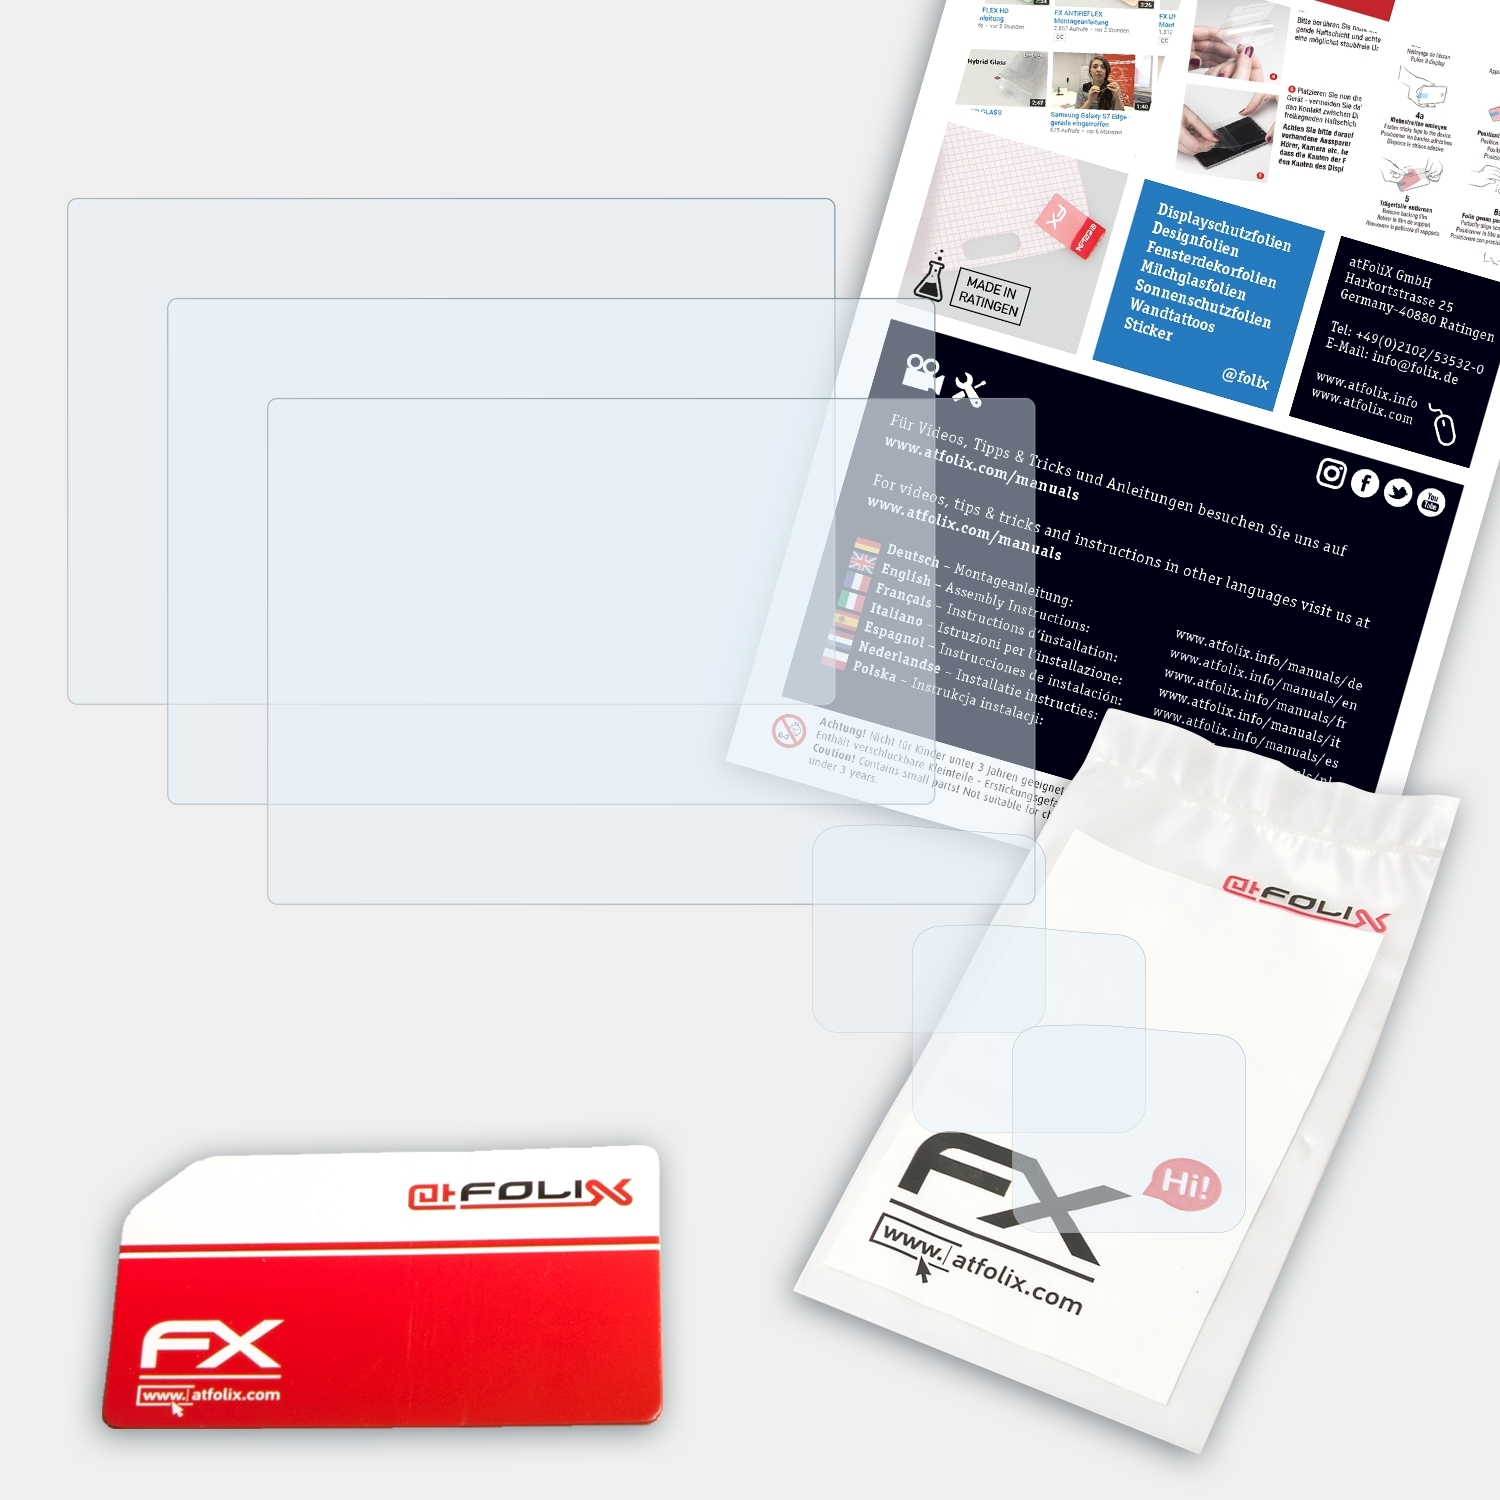 ATFOLIX 3x Mark K-3 FX-Clear Pentax III) Ricoh Displayschutz(für